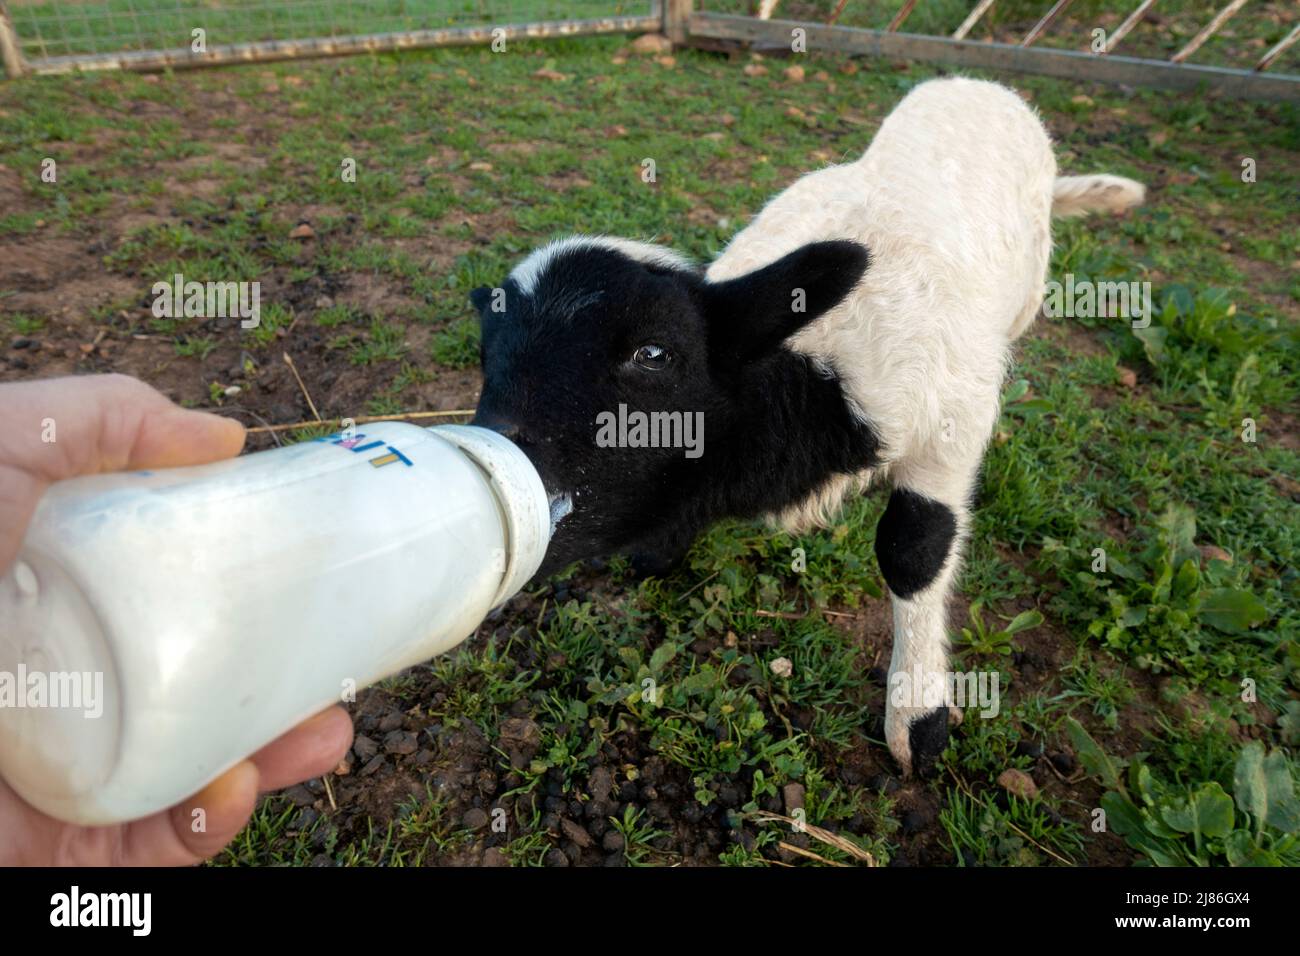 Bottle-feeding a baby lamb Stock Photo